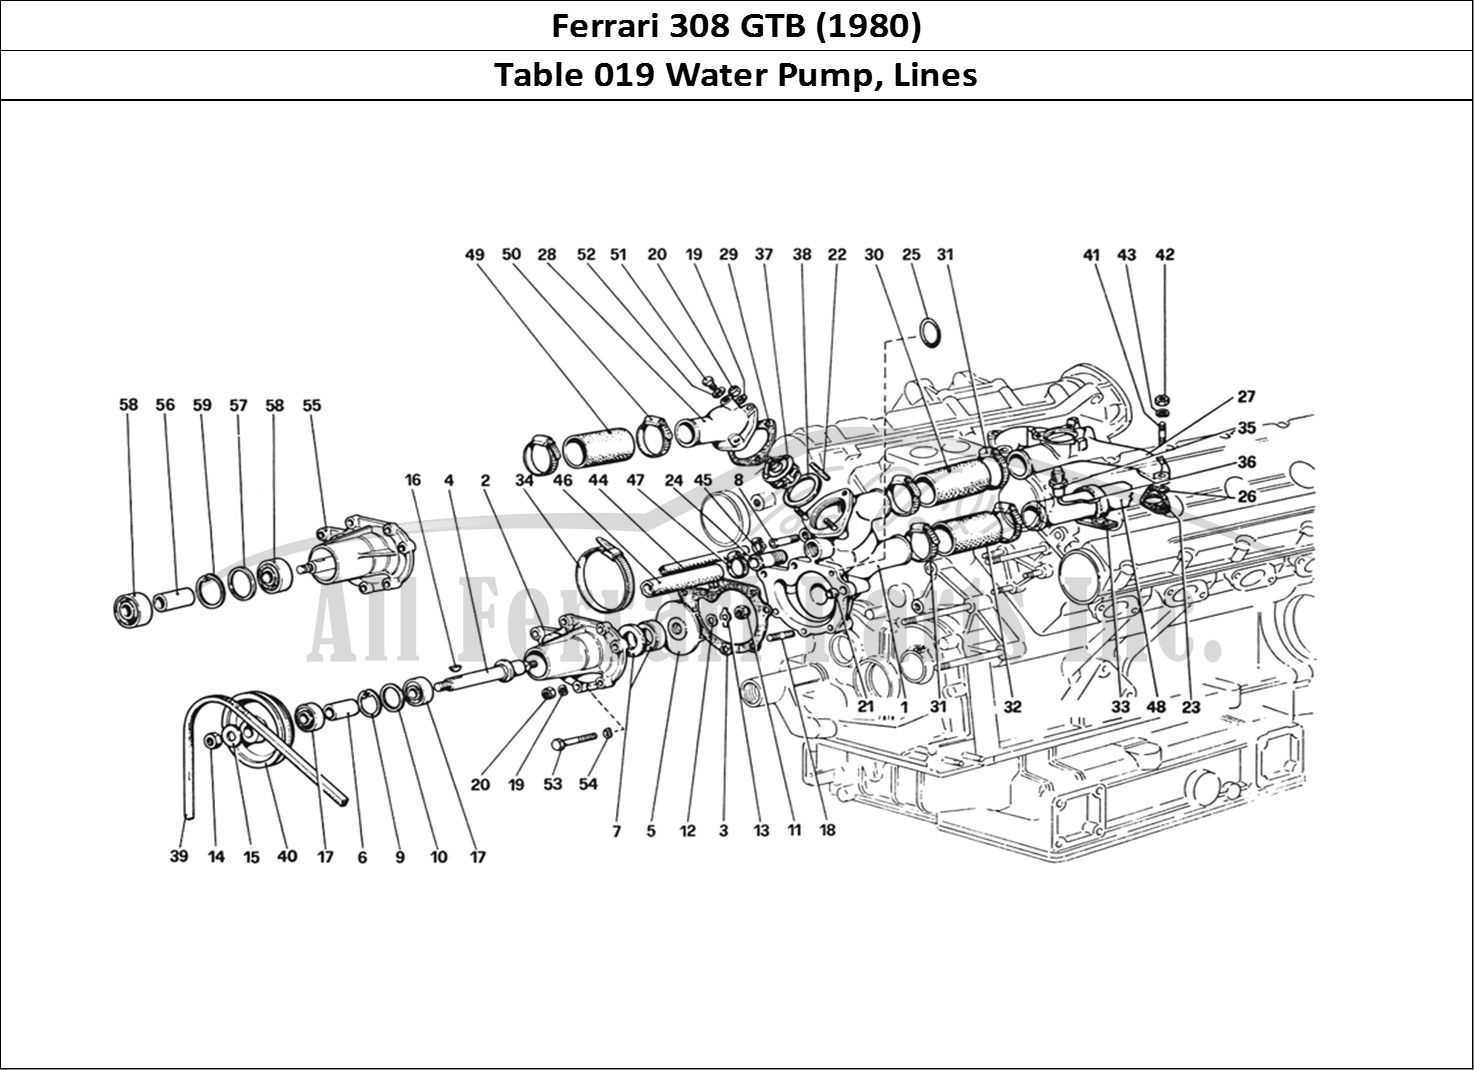 Ferrari Parts Ferrari 308 GTB (1980) Page 019 Water Pump and Pipings